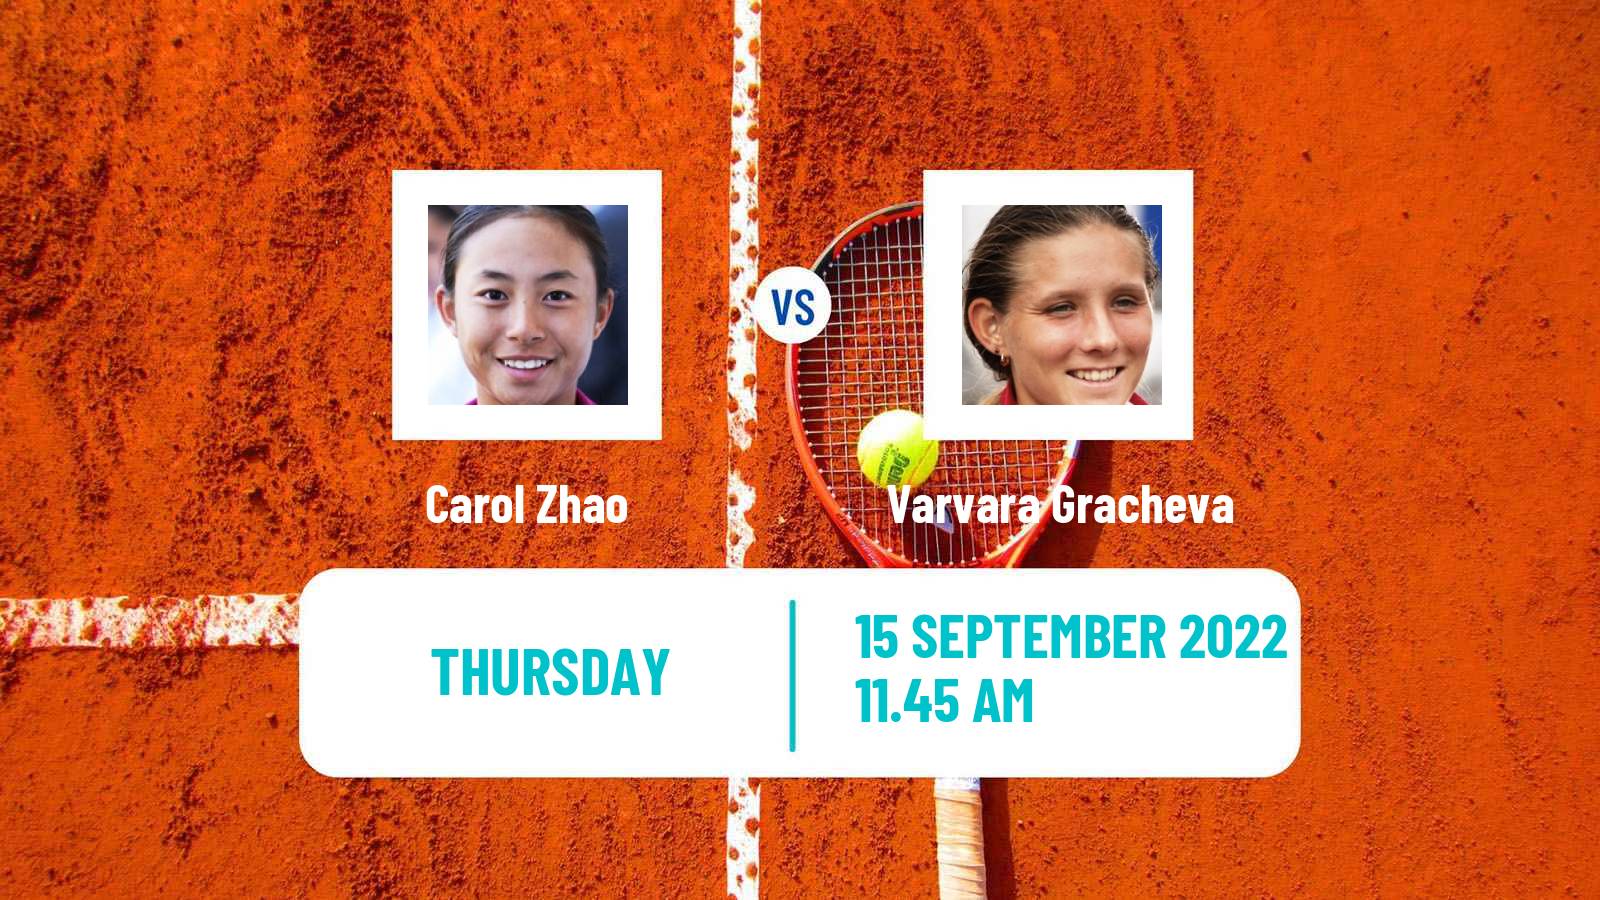 Tennis WTA Chennai Carol Zhao - Varvara Gracheva